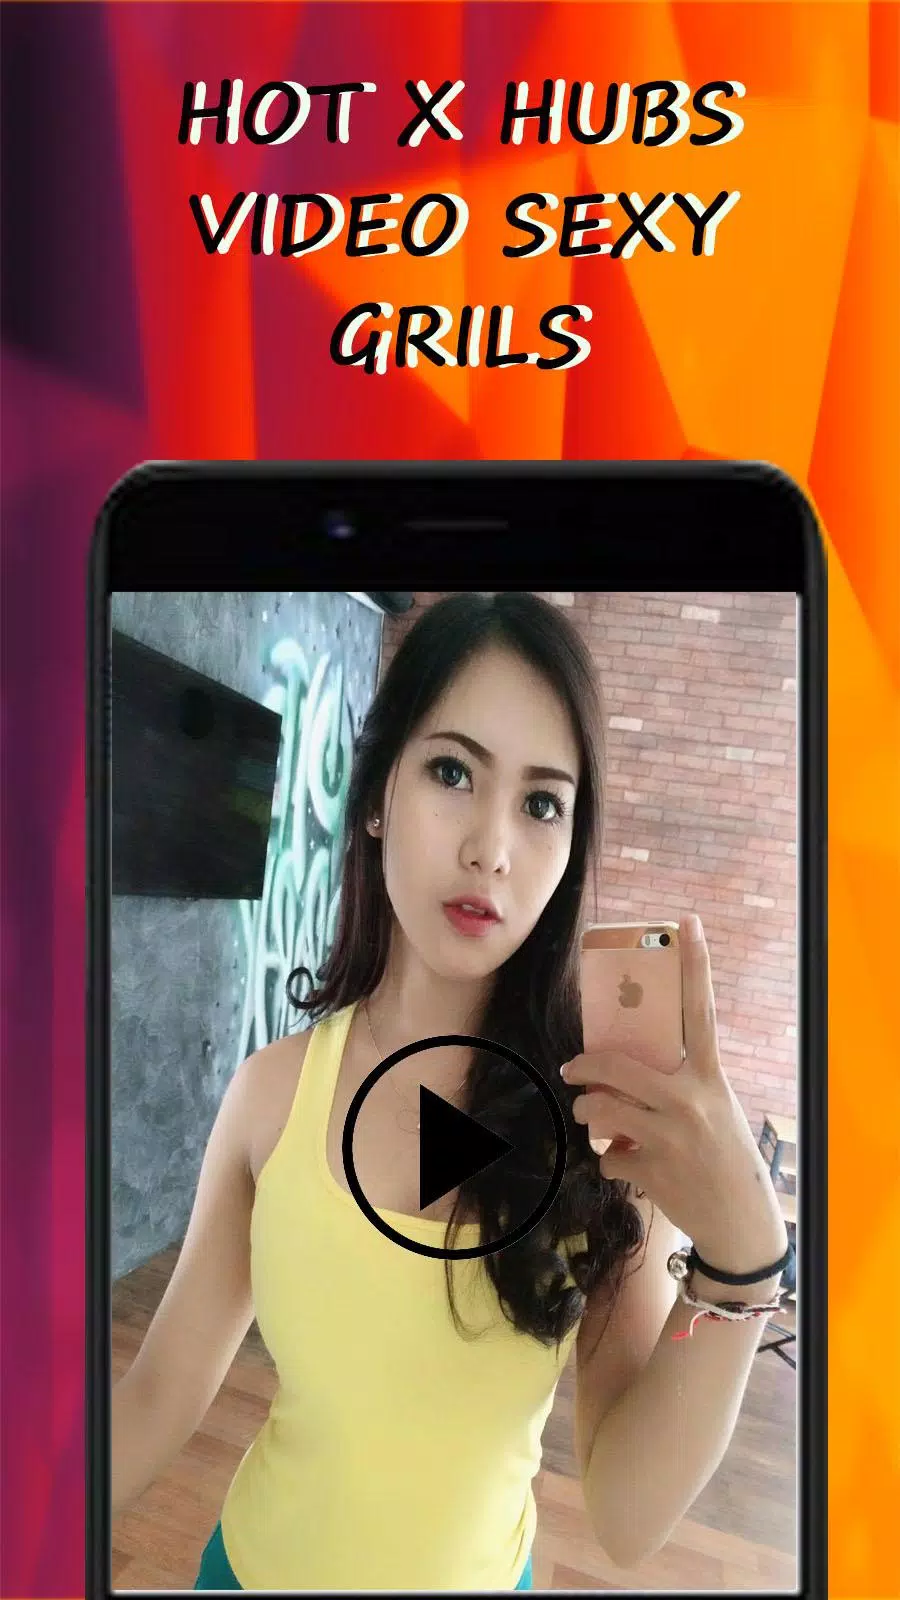 Hot X Hubs Video Sexy Grils APK untuk Unduhan Android